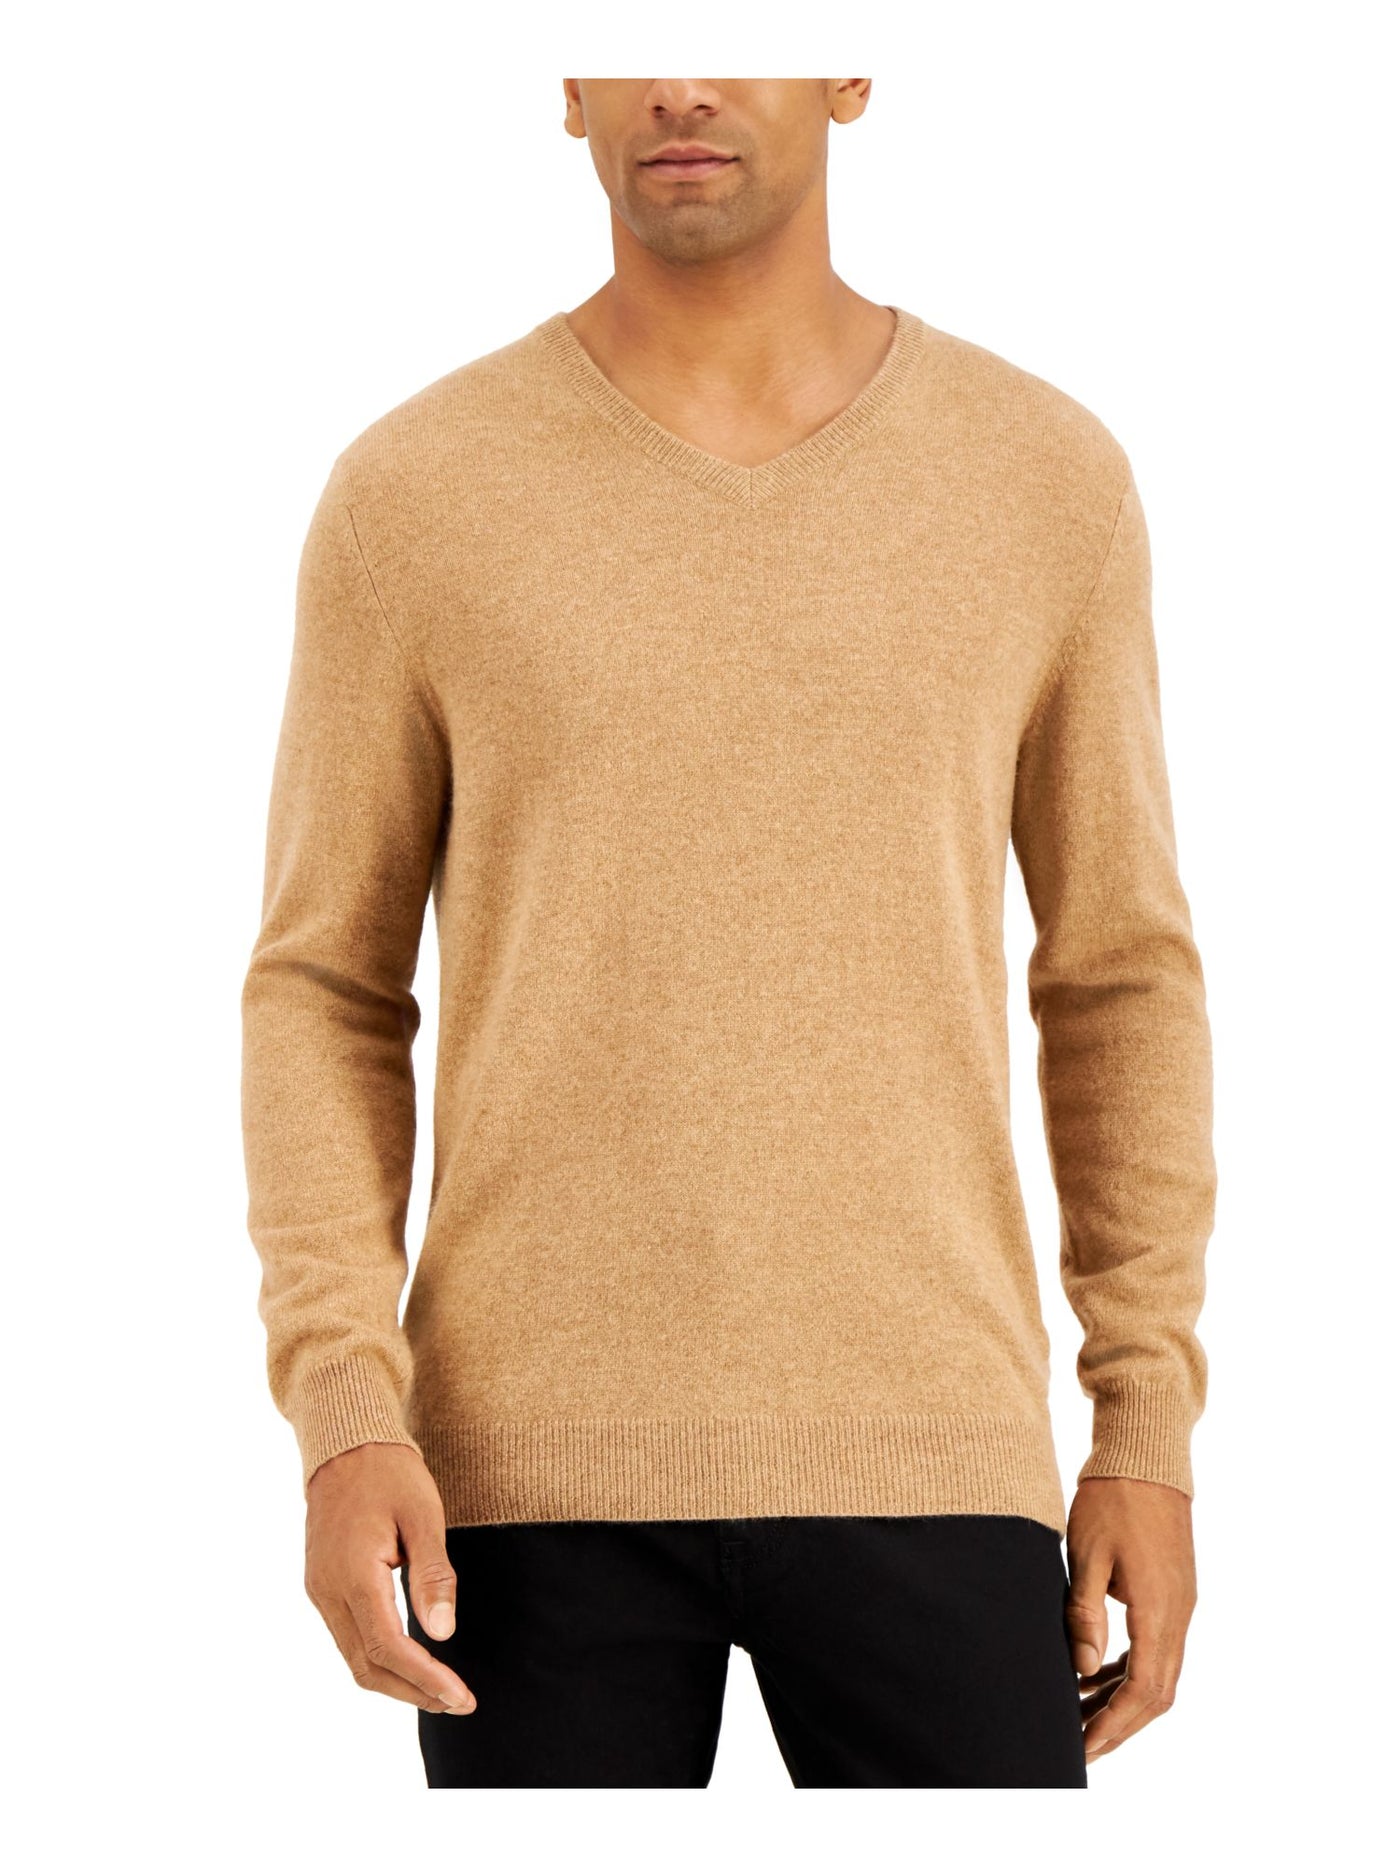 CLUBROOM Mens Beige V Neck Classic Fit Merino Blend Pullover Sweater XL